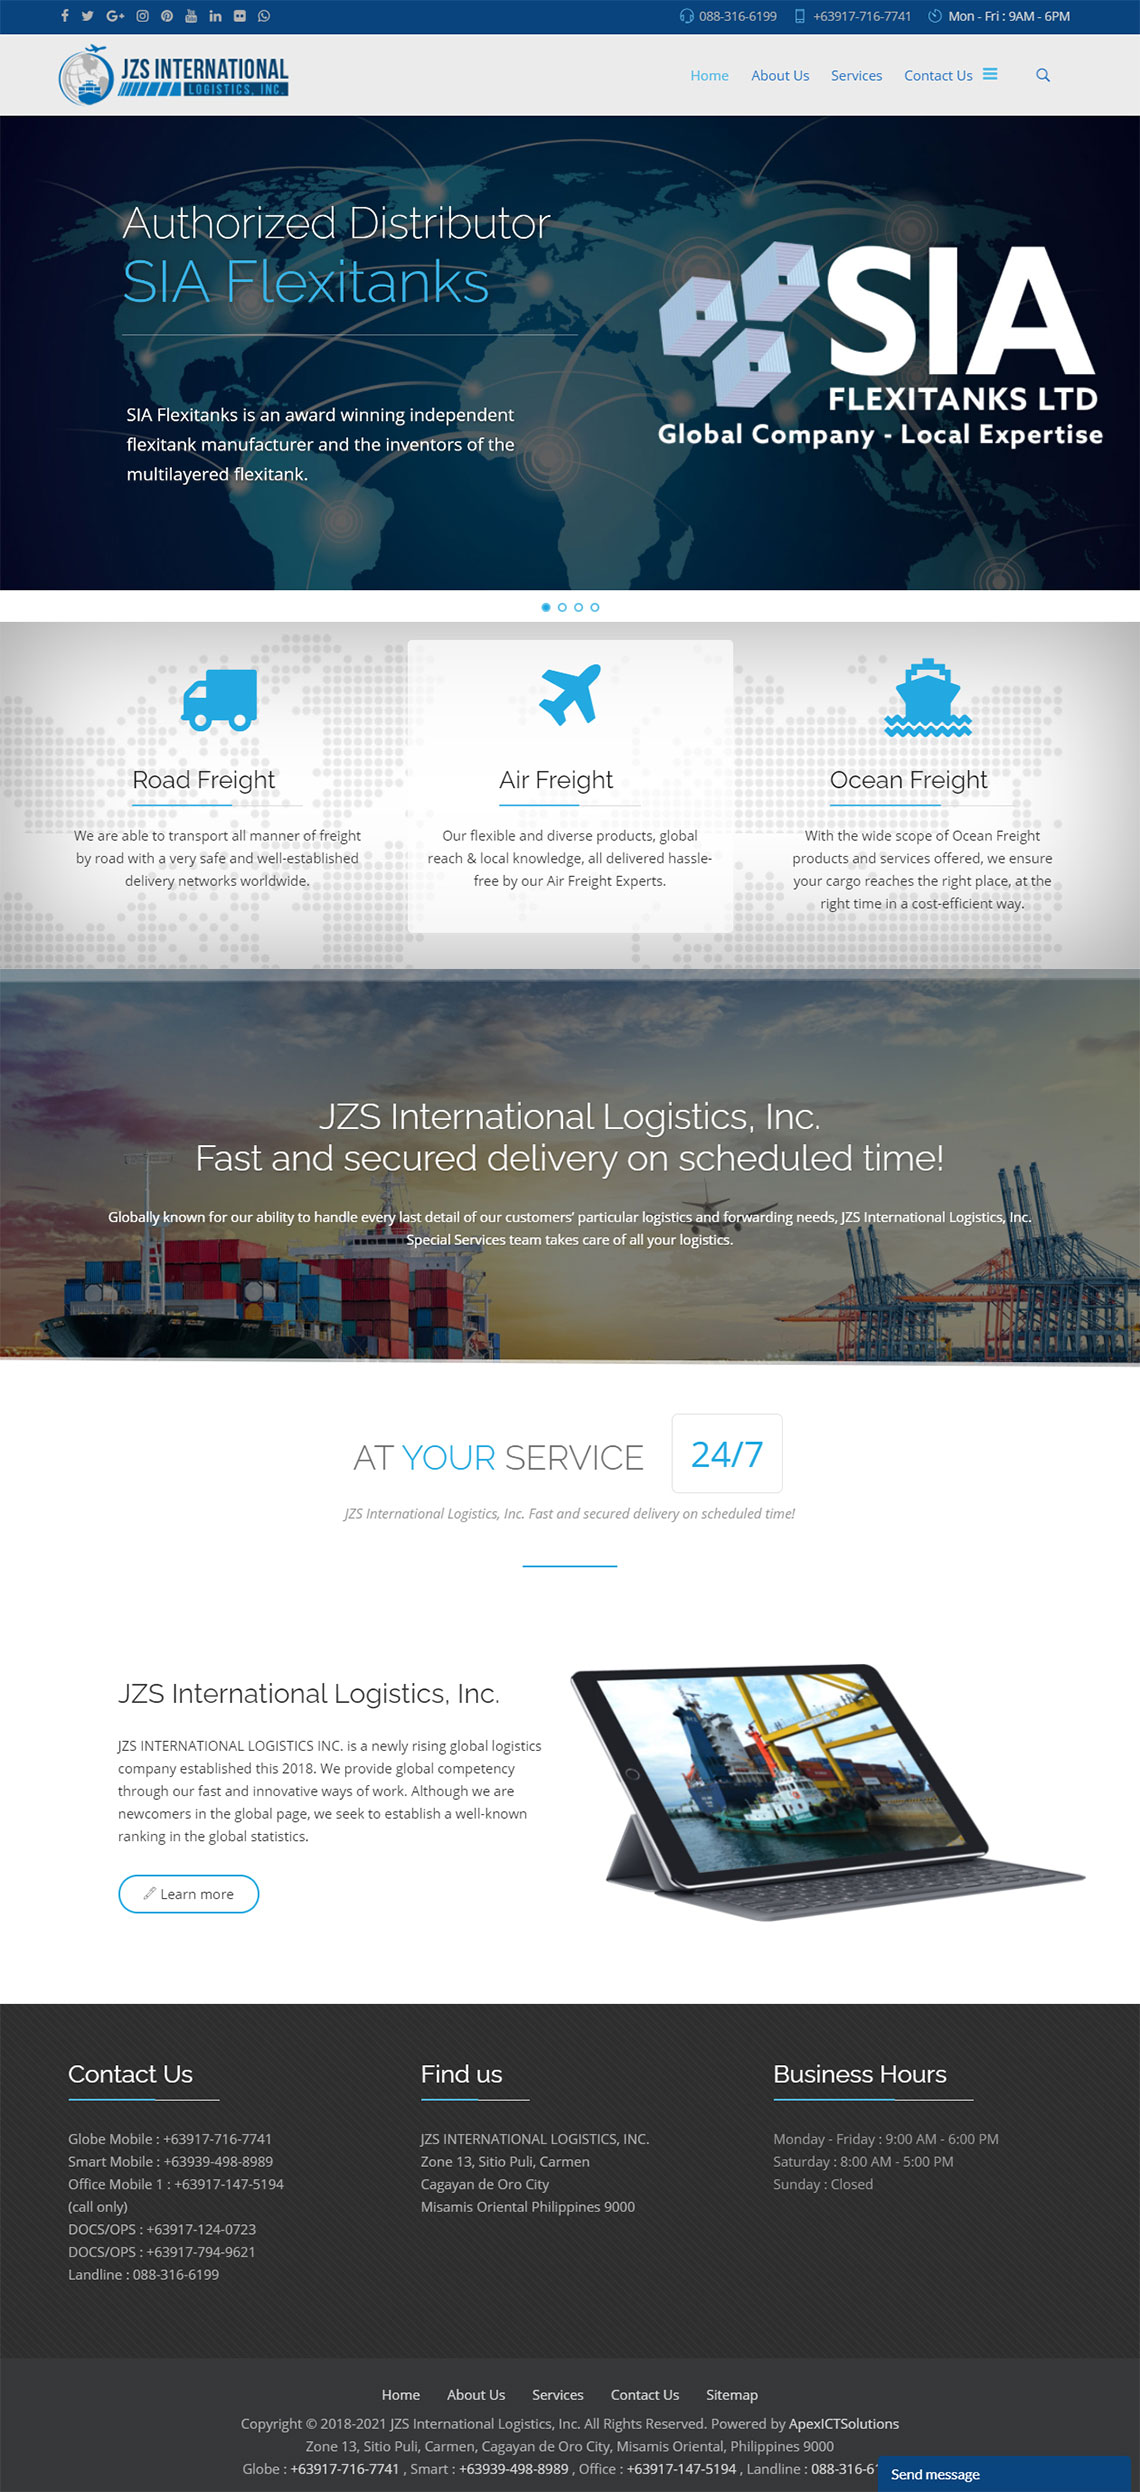  JZS International Logistics, Inc.